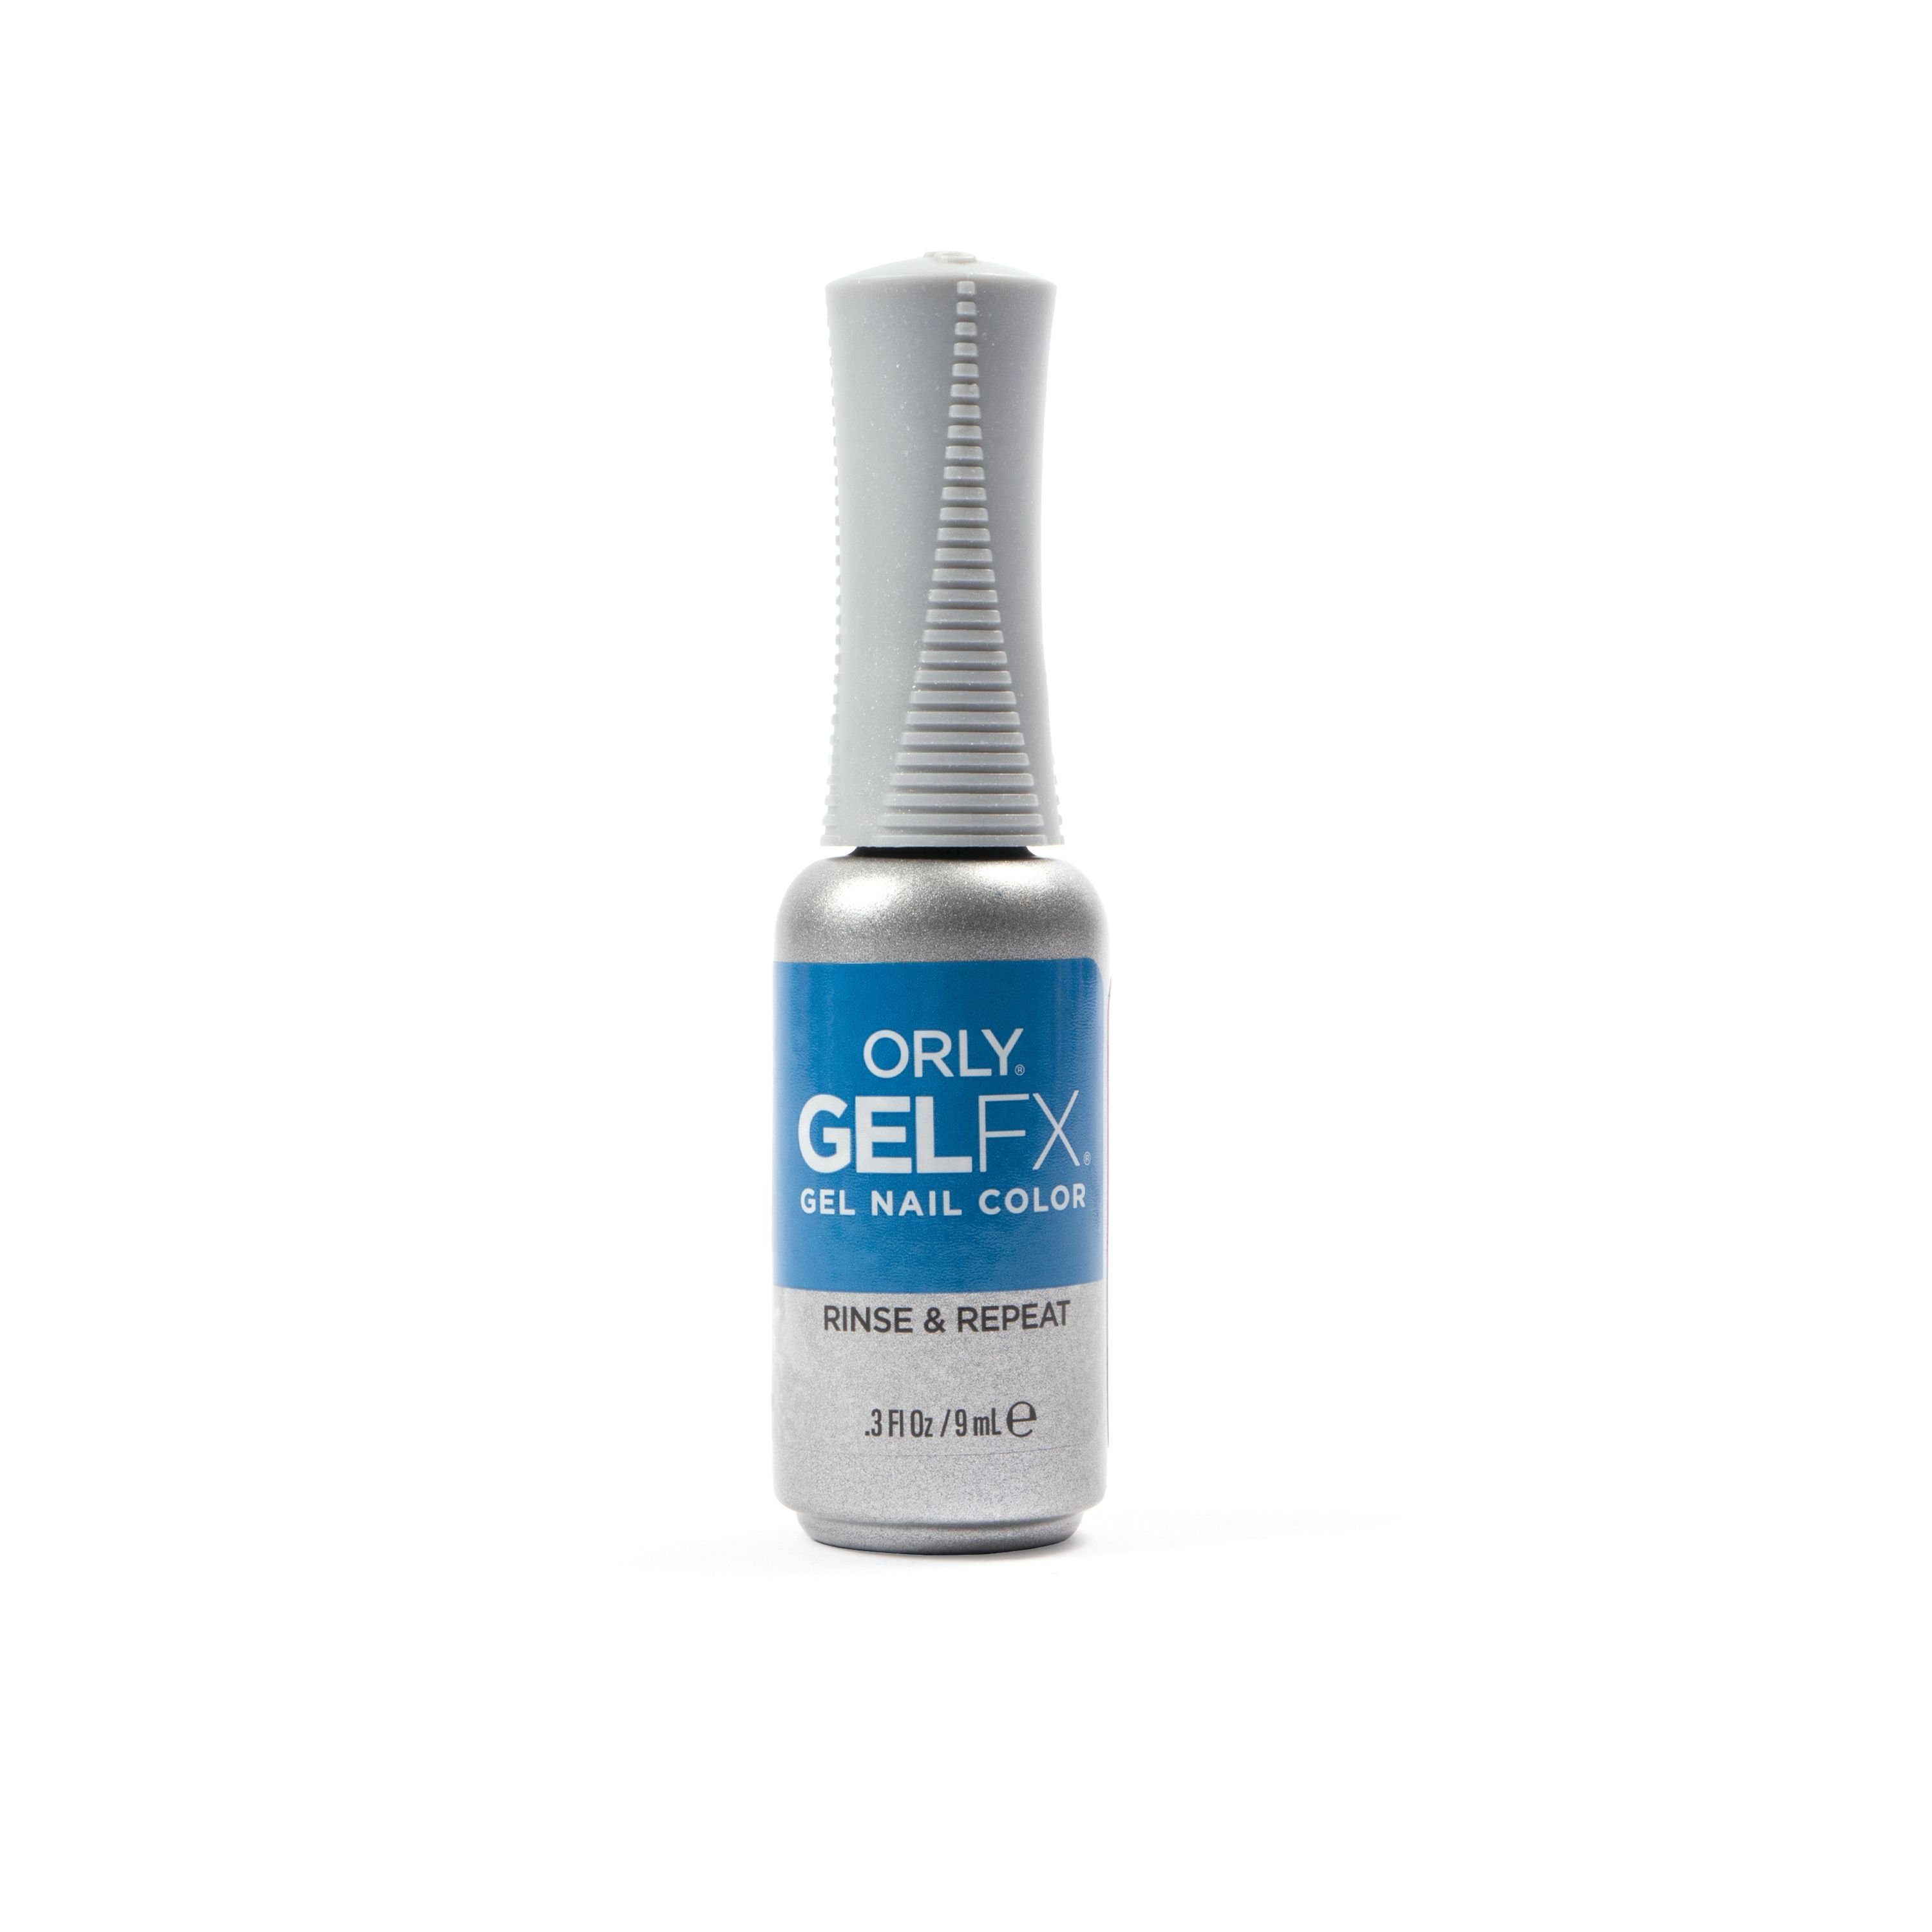 ORLY UV-Nagellack ORLY GEL FX Rinse & Repeat